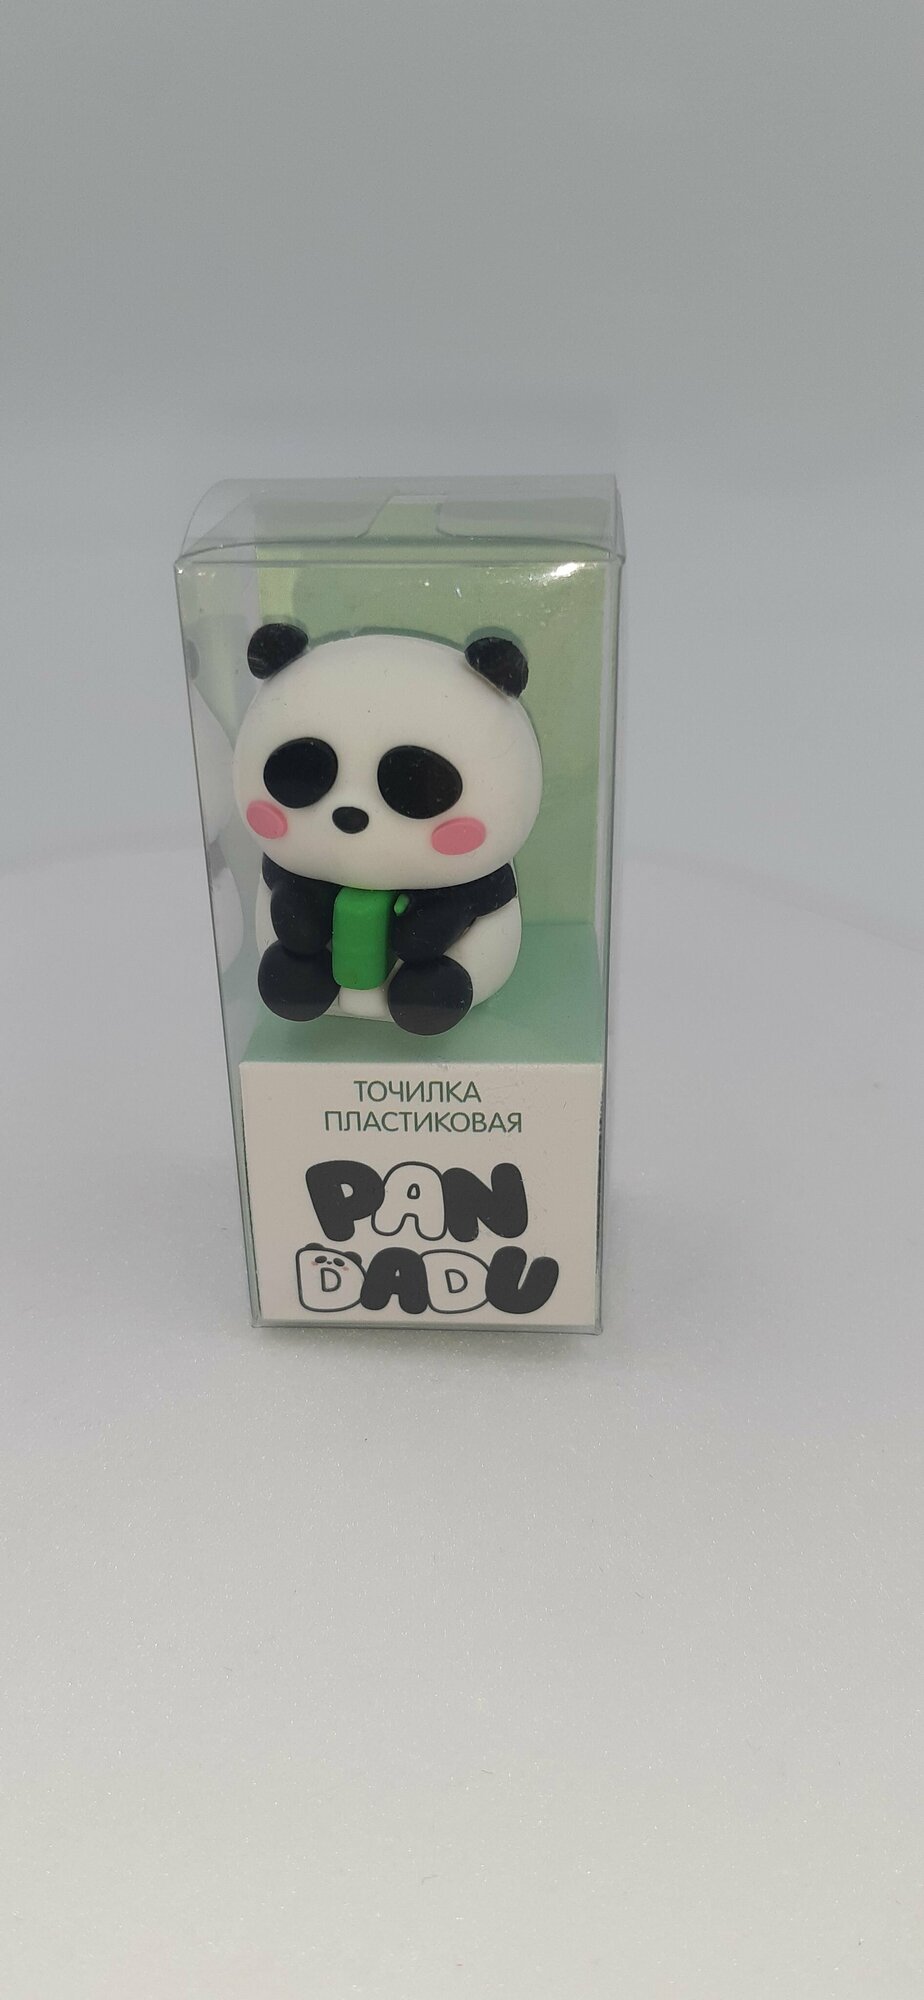 Точилка-игрушка Панда с бамбуком 3,5 см без контейнера в коробочке 75*35*30 мм